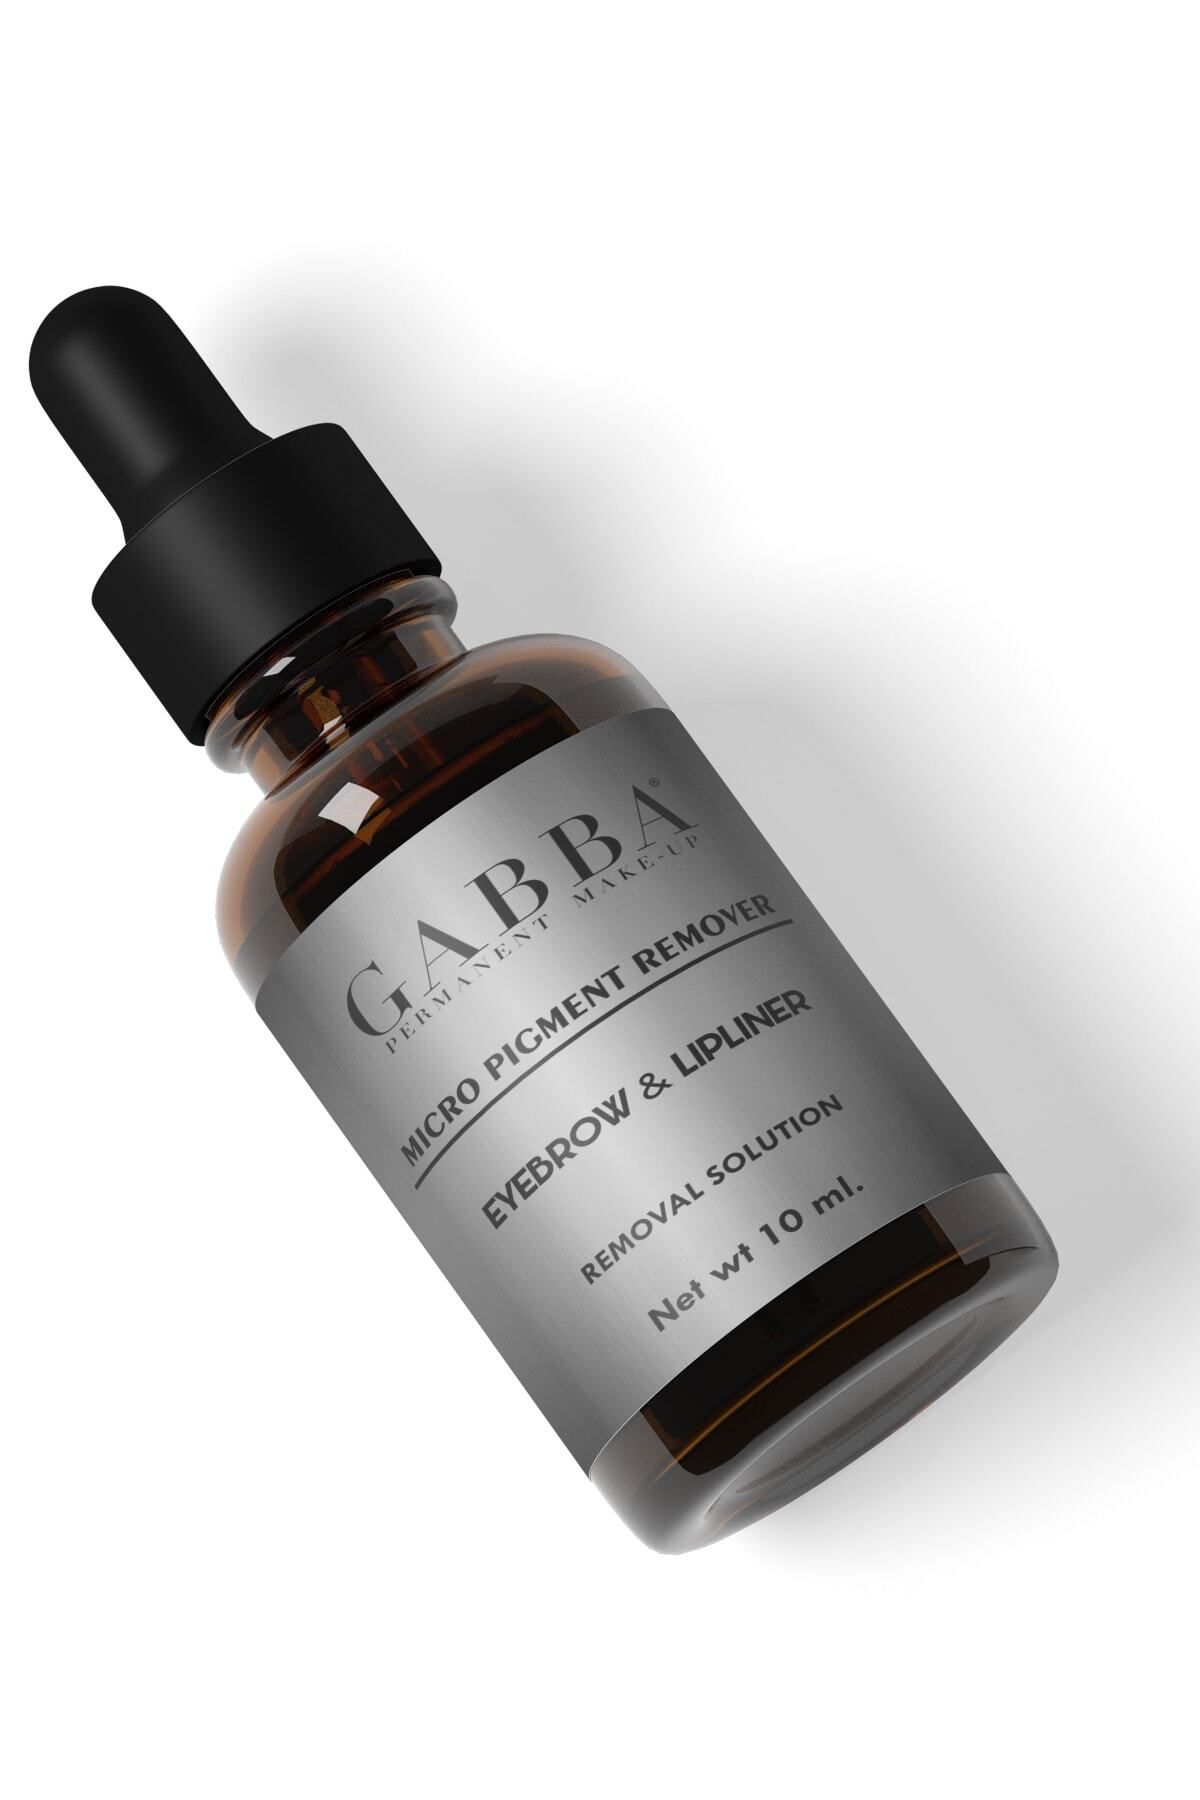 GABBA PERMANENT MAKE-UP Gabba Tattoo Remover/ Organik Kalıcı Makyaj,kaş Silme Solüsyonu /permanent Makeup Remover 10 ml